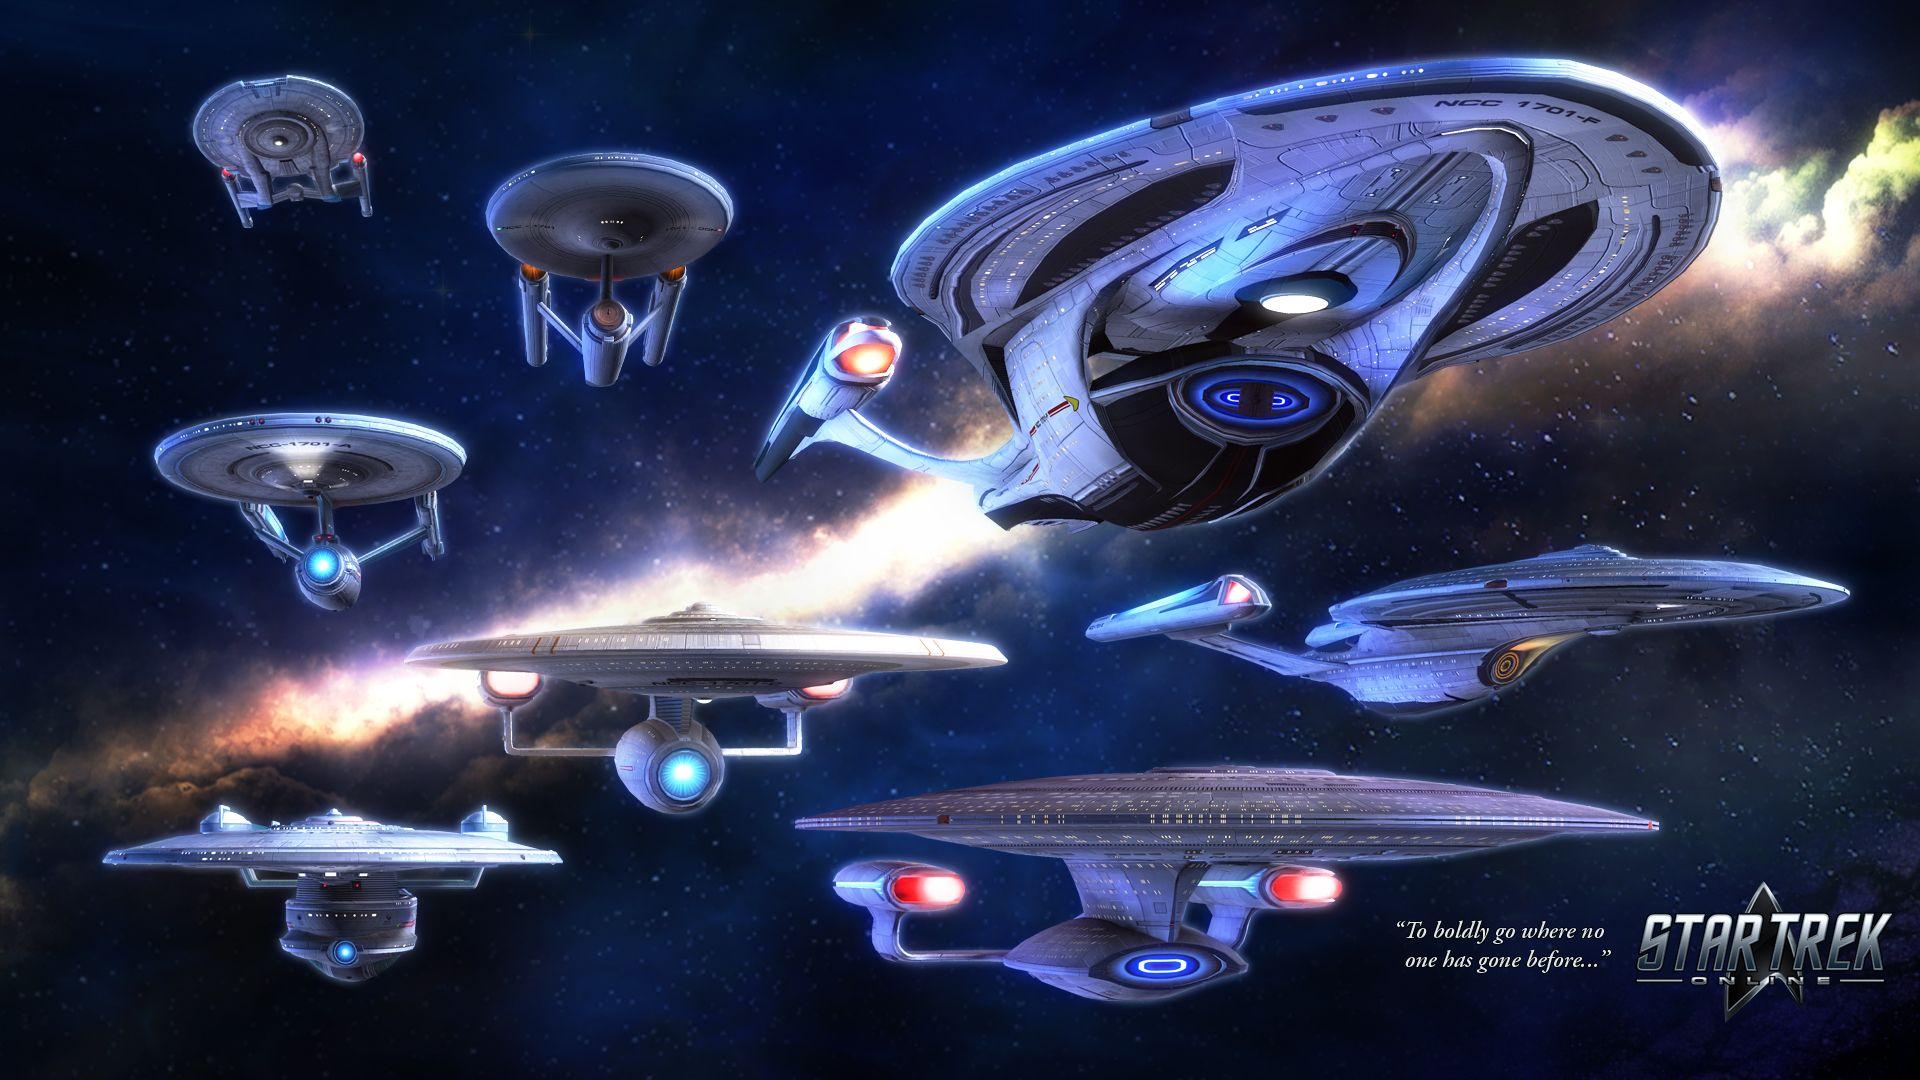 Star Trek Enterprise Wallpapers Top Free Star Trek Enterprise Backgrounds Wallpaperaccess